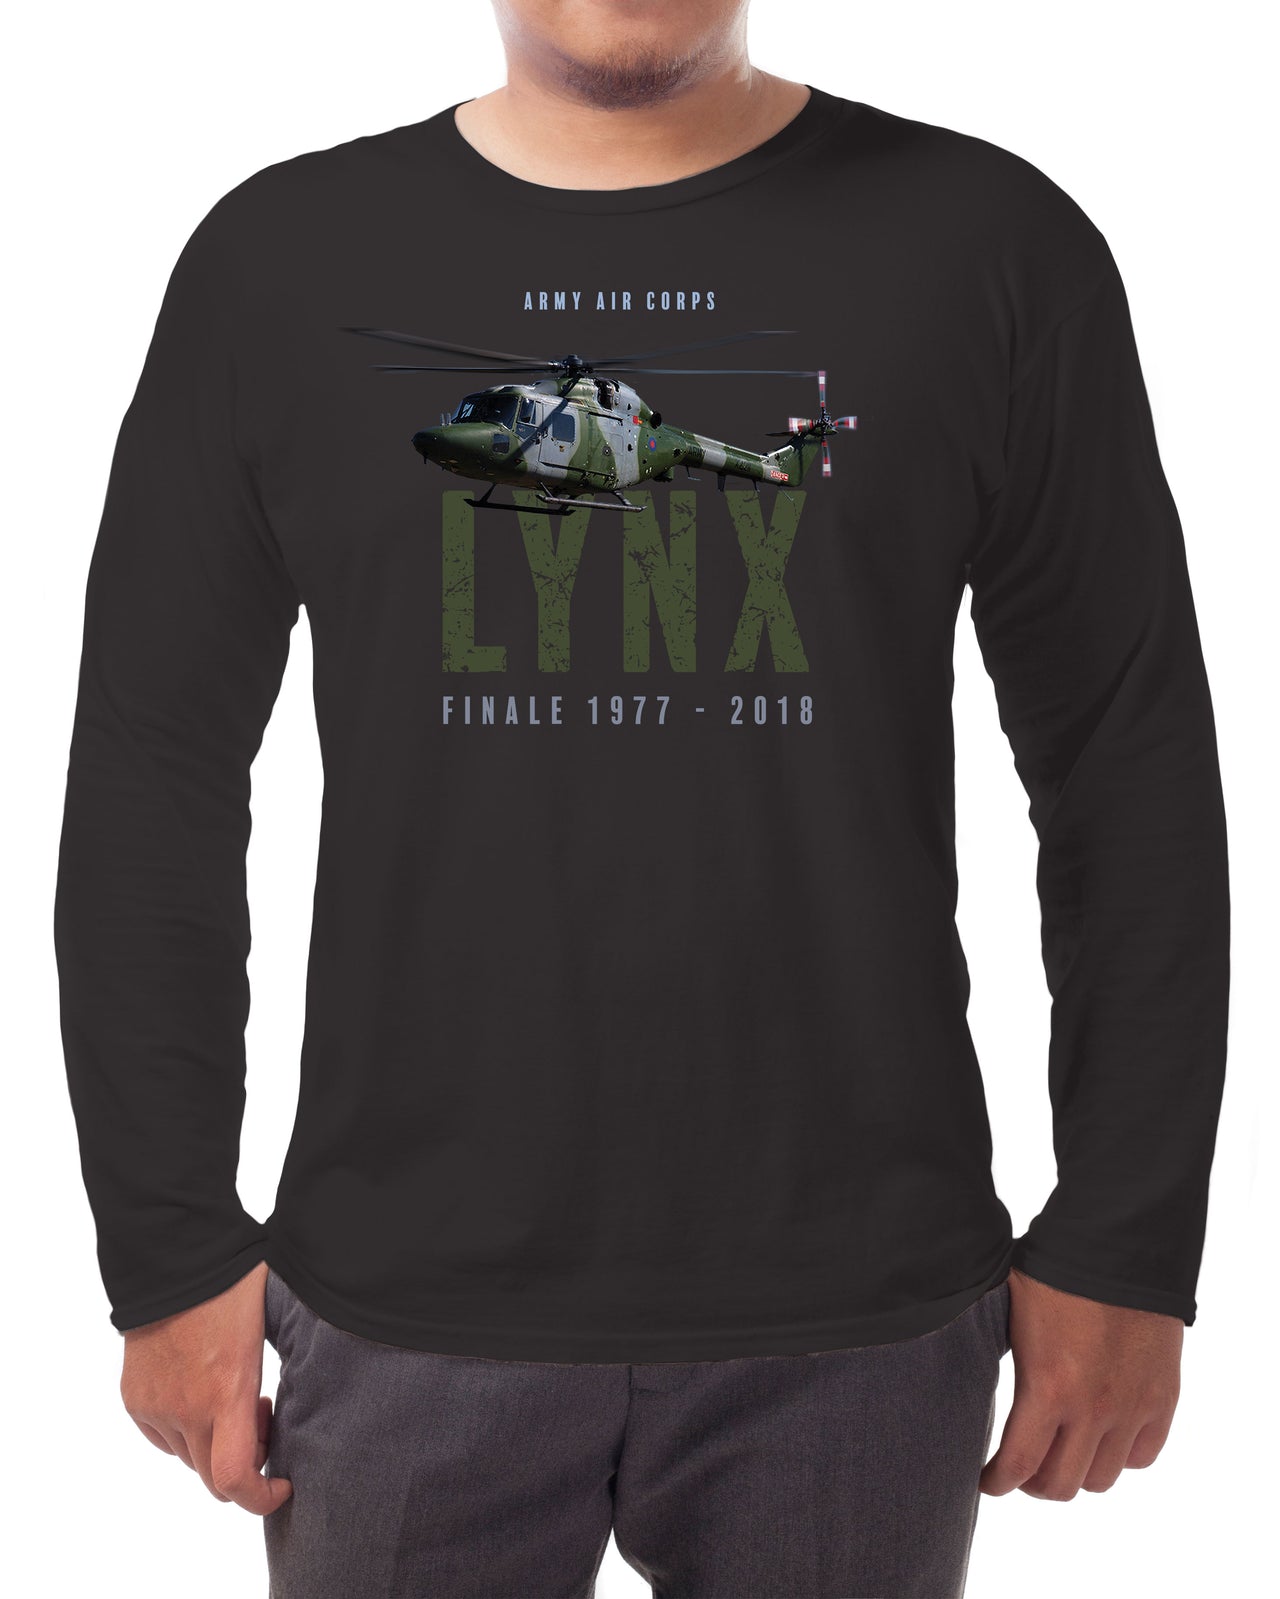 Westland Lynx - Long-sleeve T-shirt